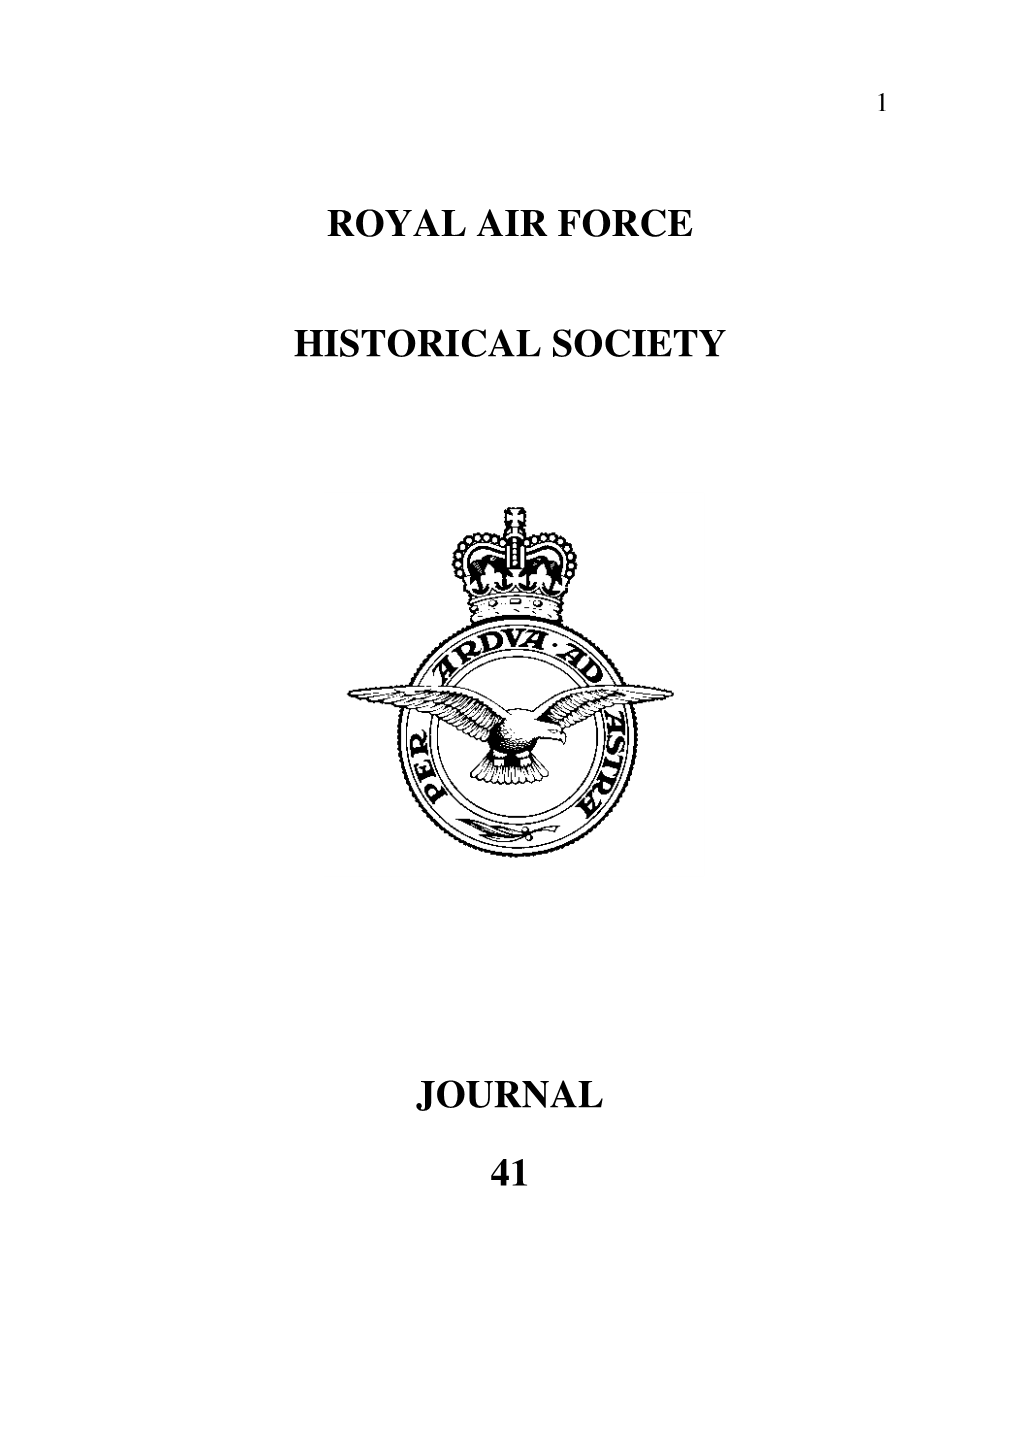 Royal Air Force Historical Society Journal 41